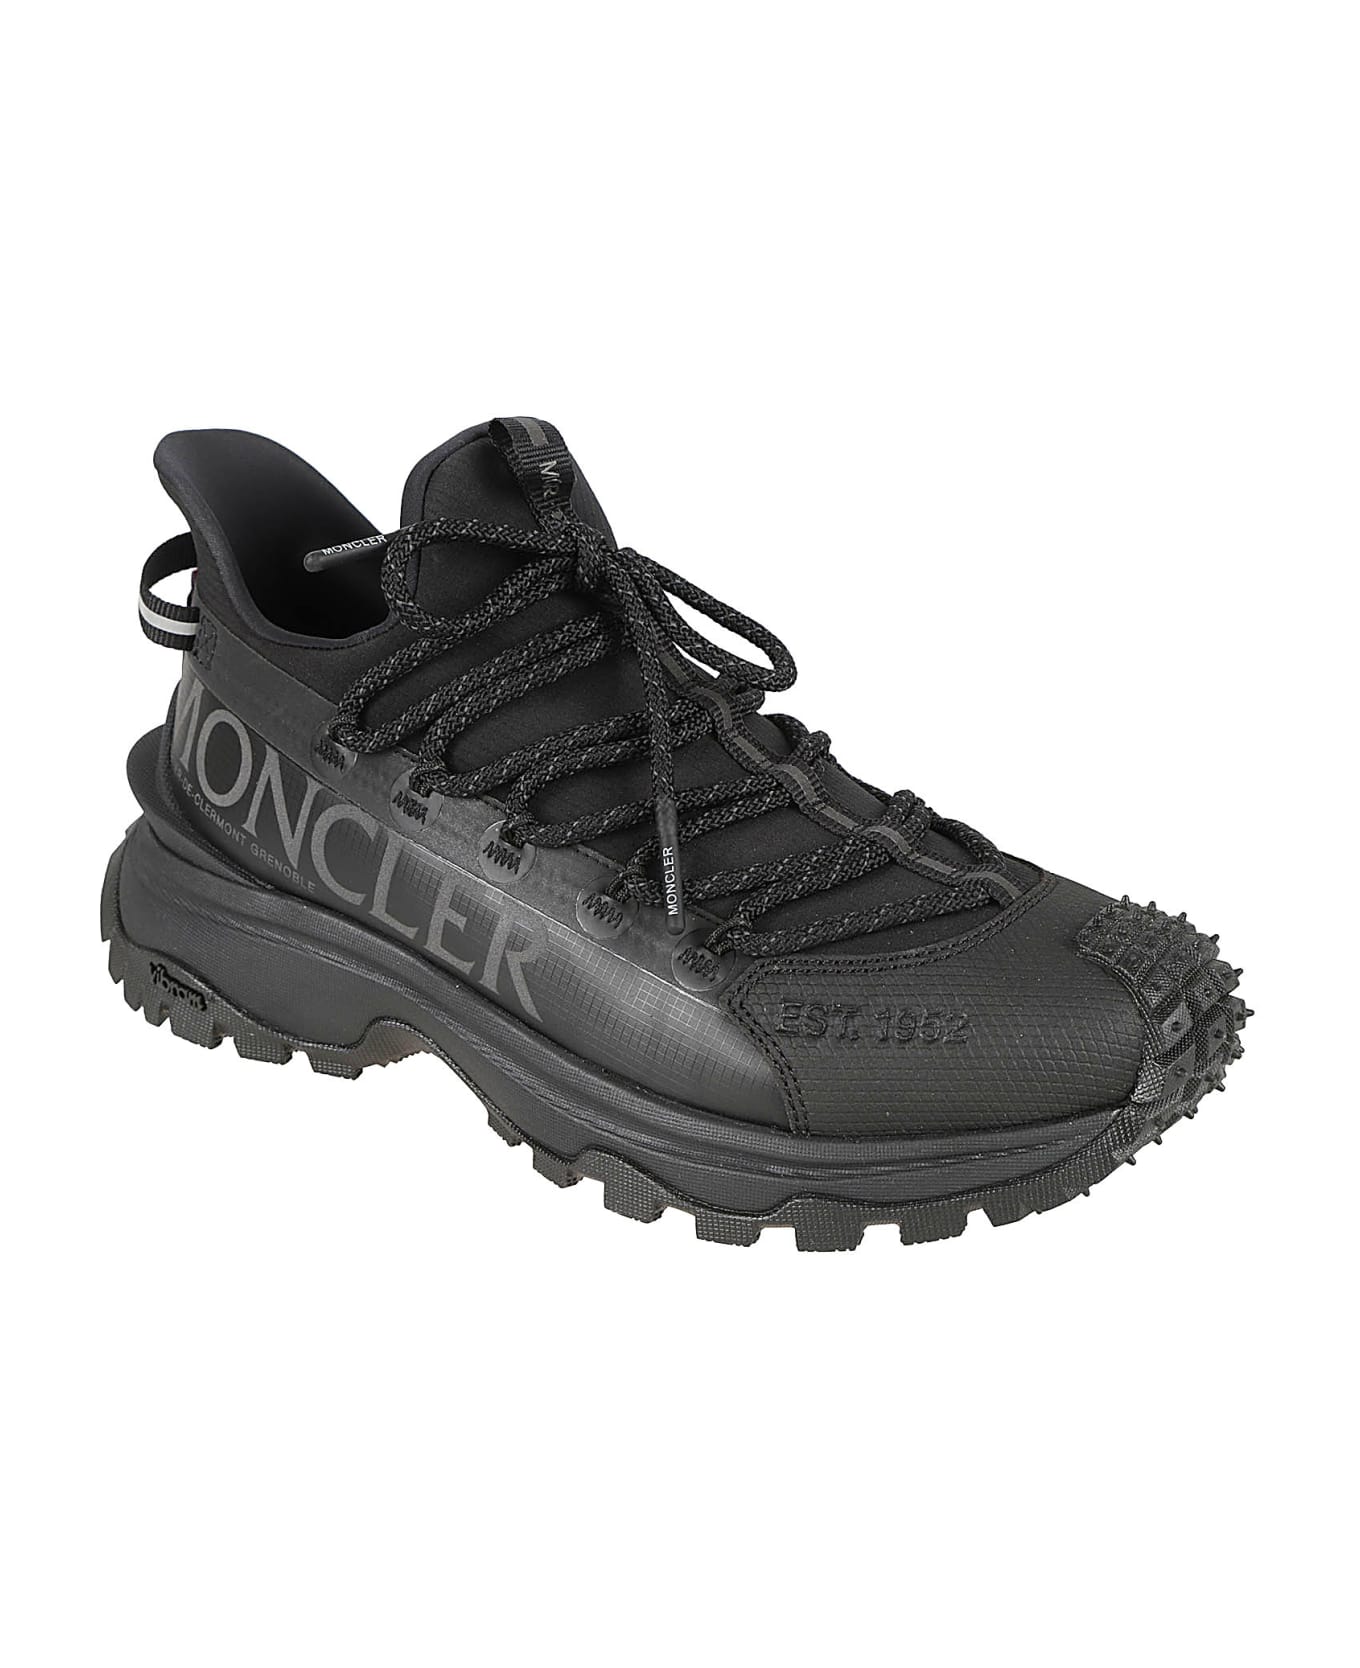 Moncler Trailgrip Lite2 Sneakers - Black